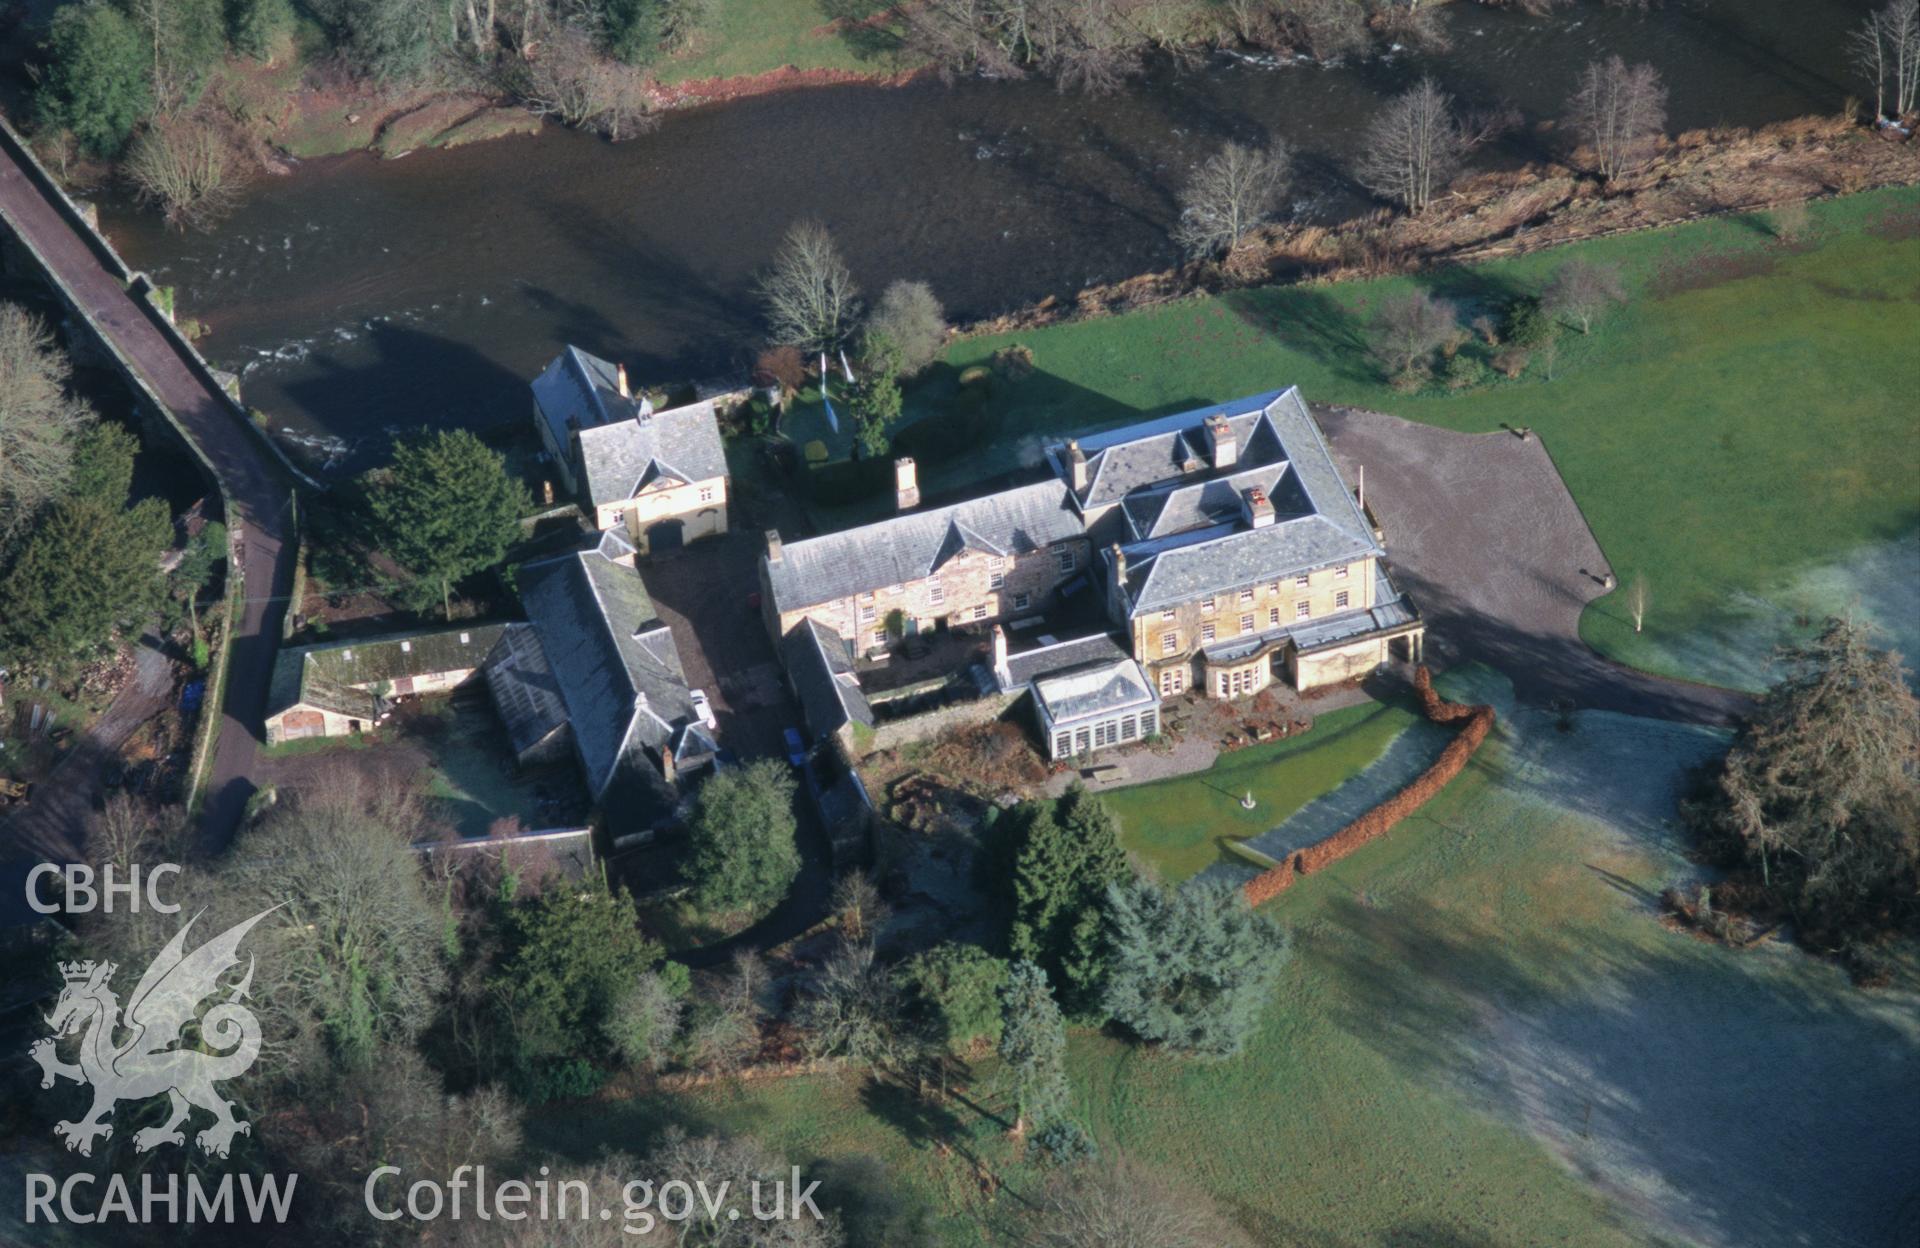 Slide of RCAHMW colour oblique aerial photograph of Penpont Manor House, Penpont, Brecon, taken by T.G. Driver, 2/1/2001.